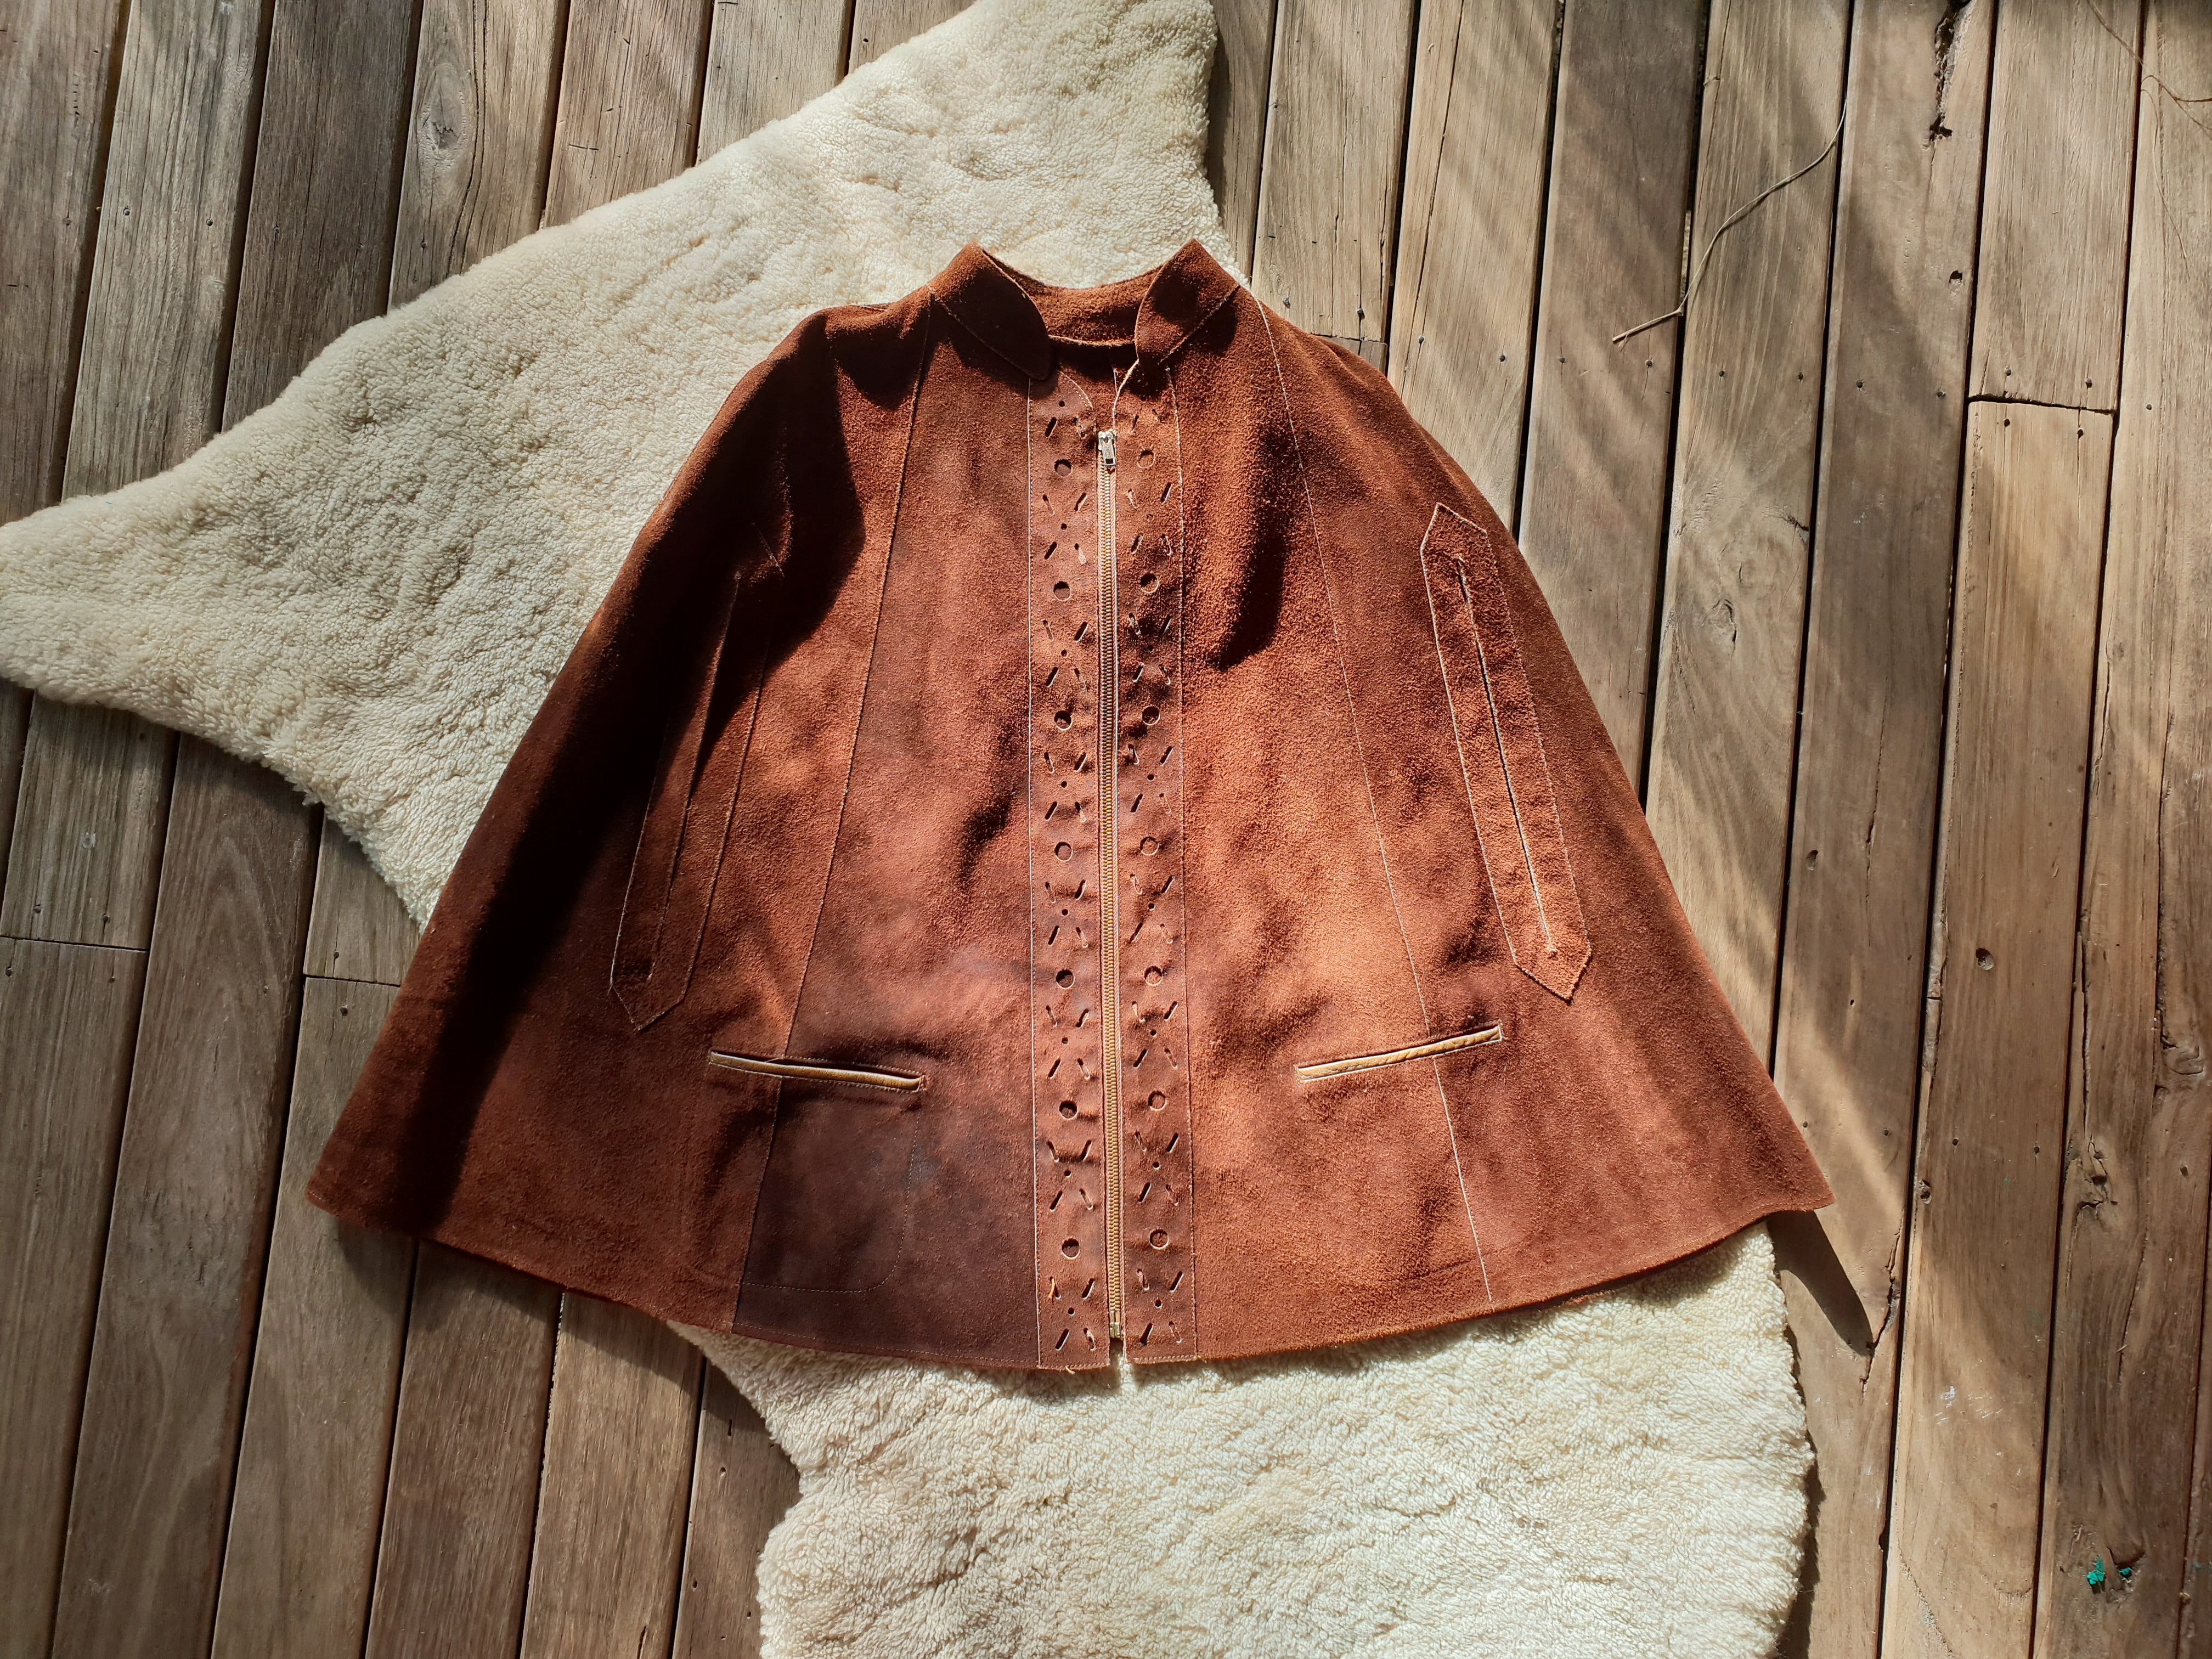 Seek商品一覧1960s vintage suede leather poncho